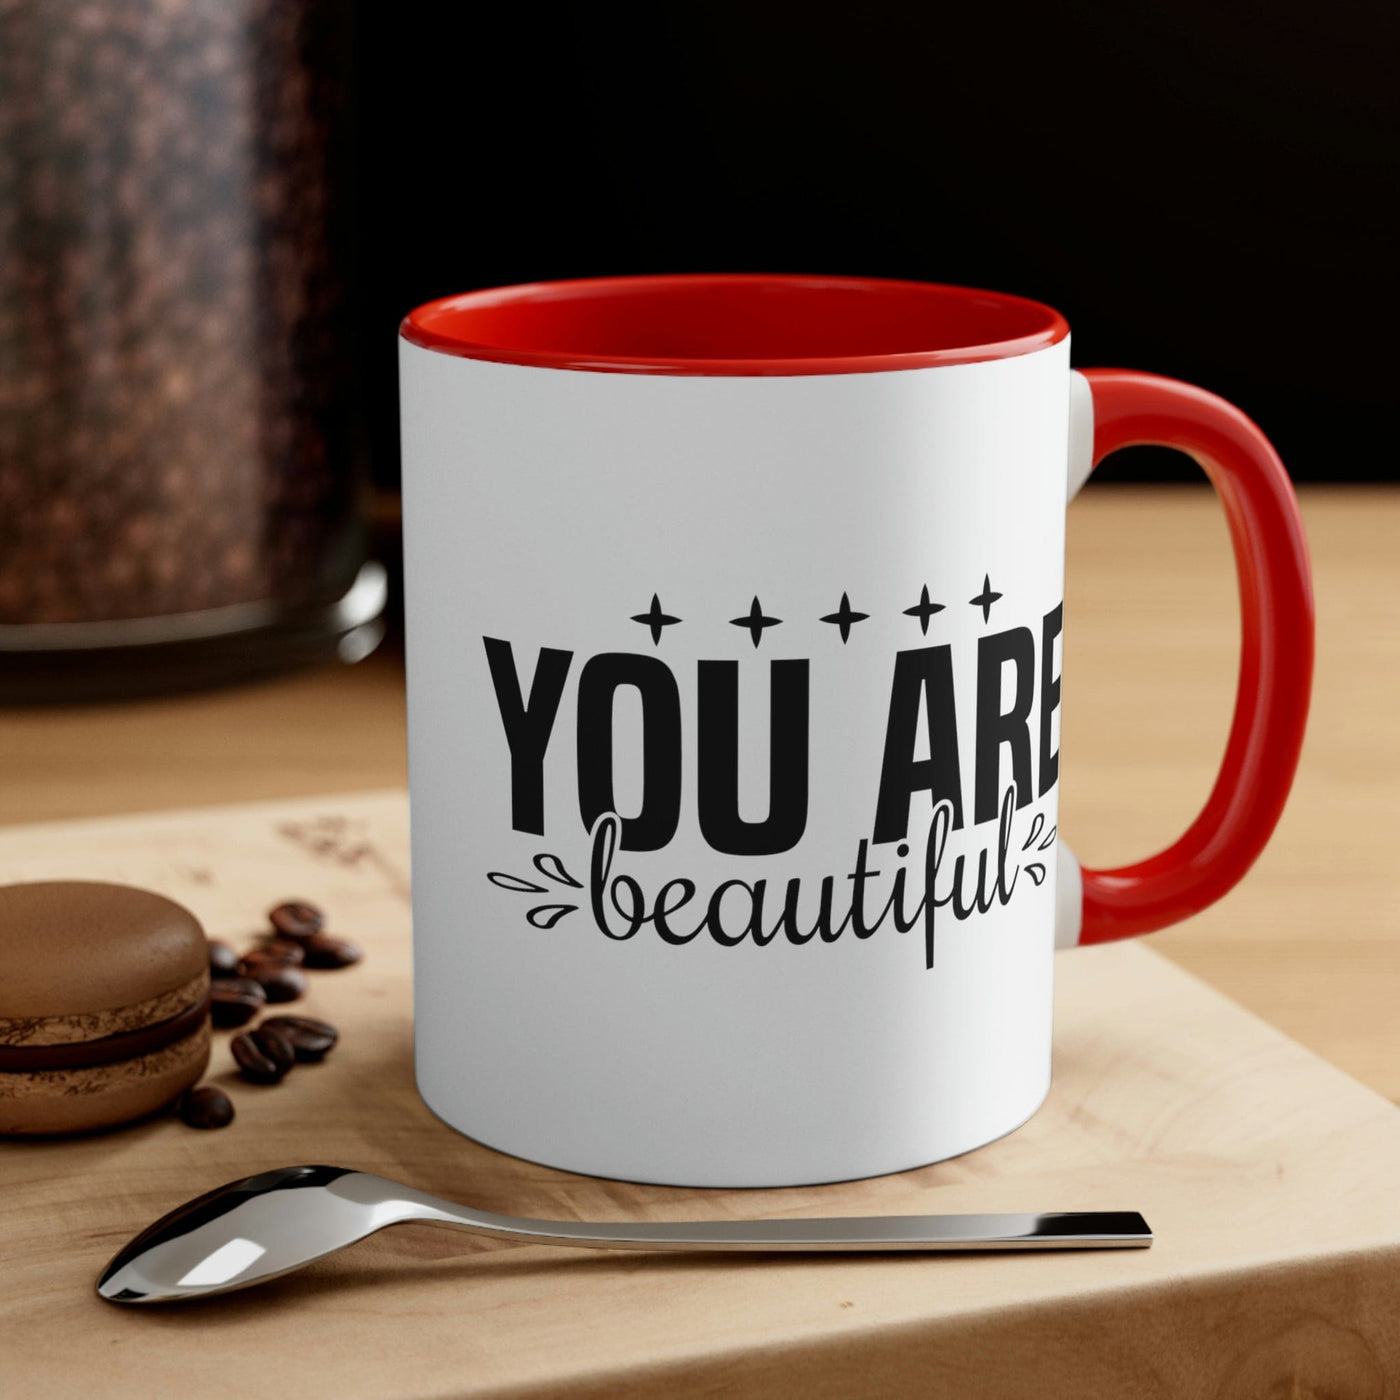 Two-tone Accent Ceramic Mug 11oz You Are Beautiful Inspiration Affirmation